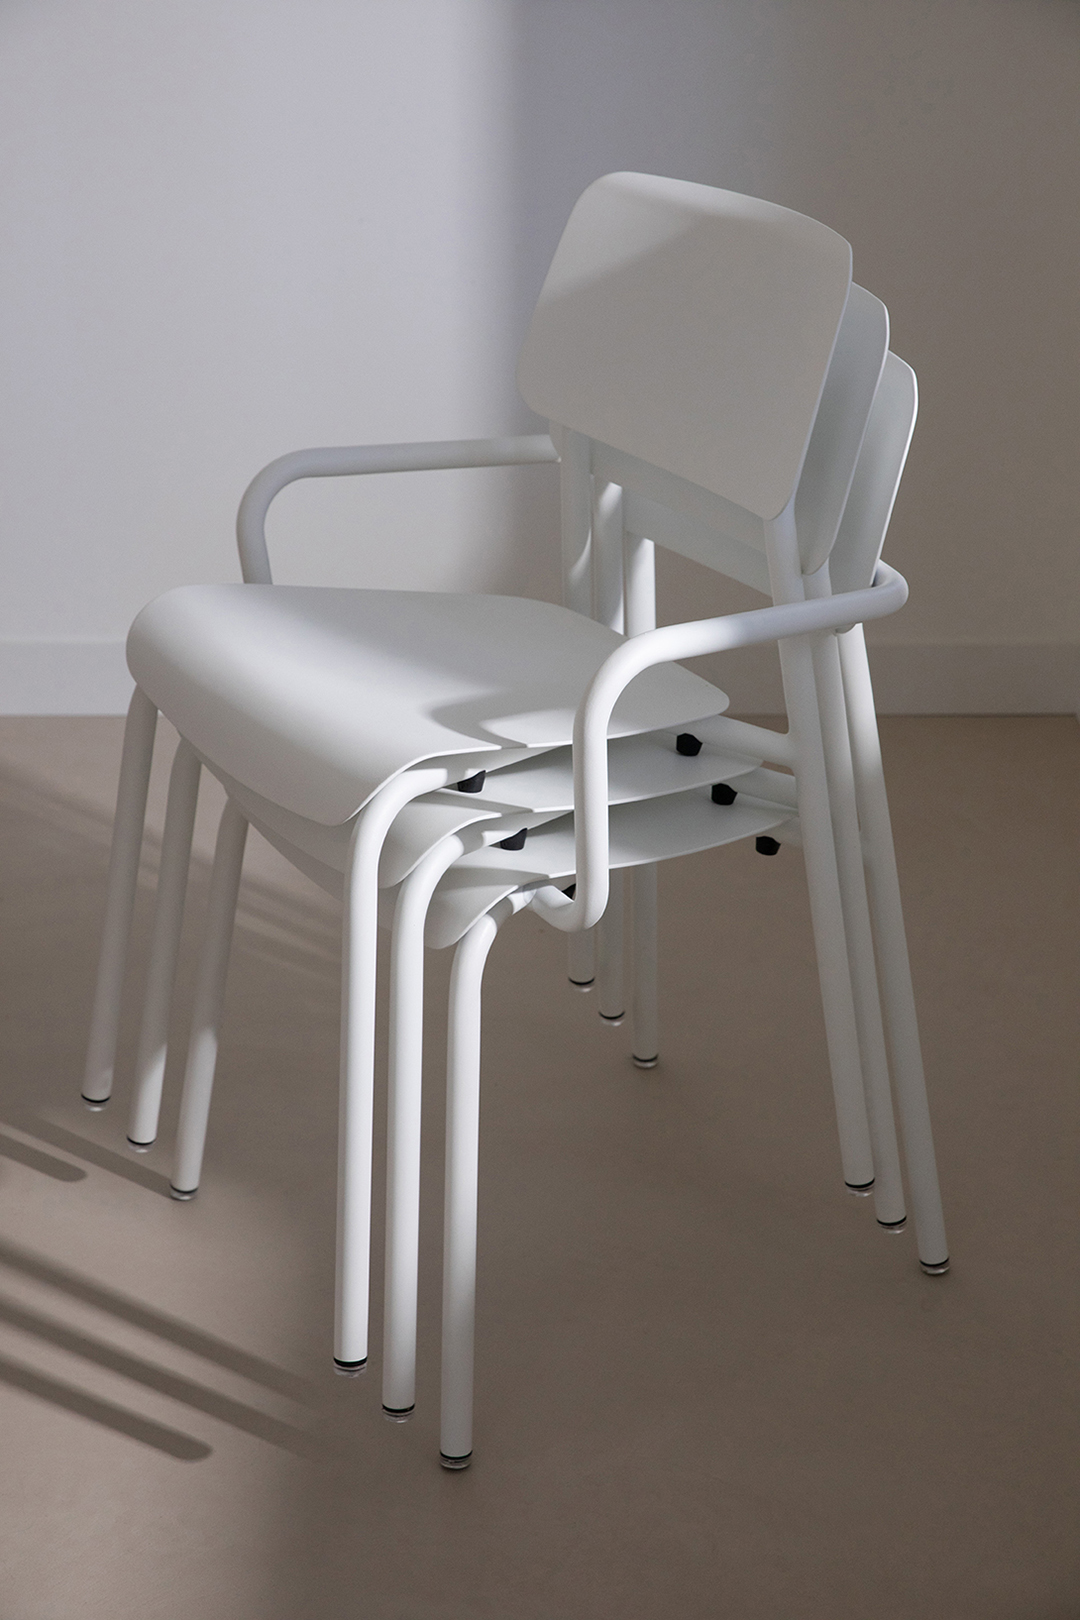 Chaise design, bridge design, mobilier, assise de jardin, chaise de jardin, bridge de jardin, chaise avec accoudoir, outdoor furniture, metal chair